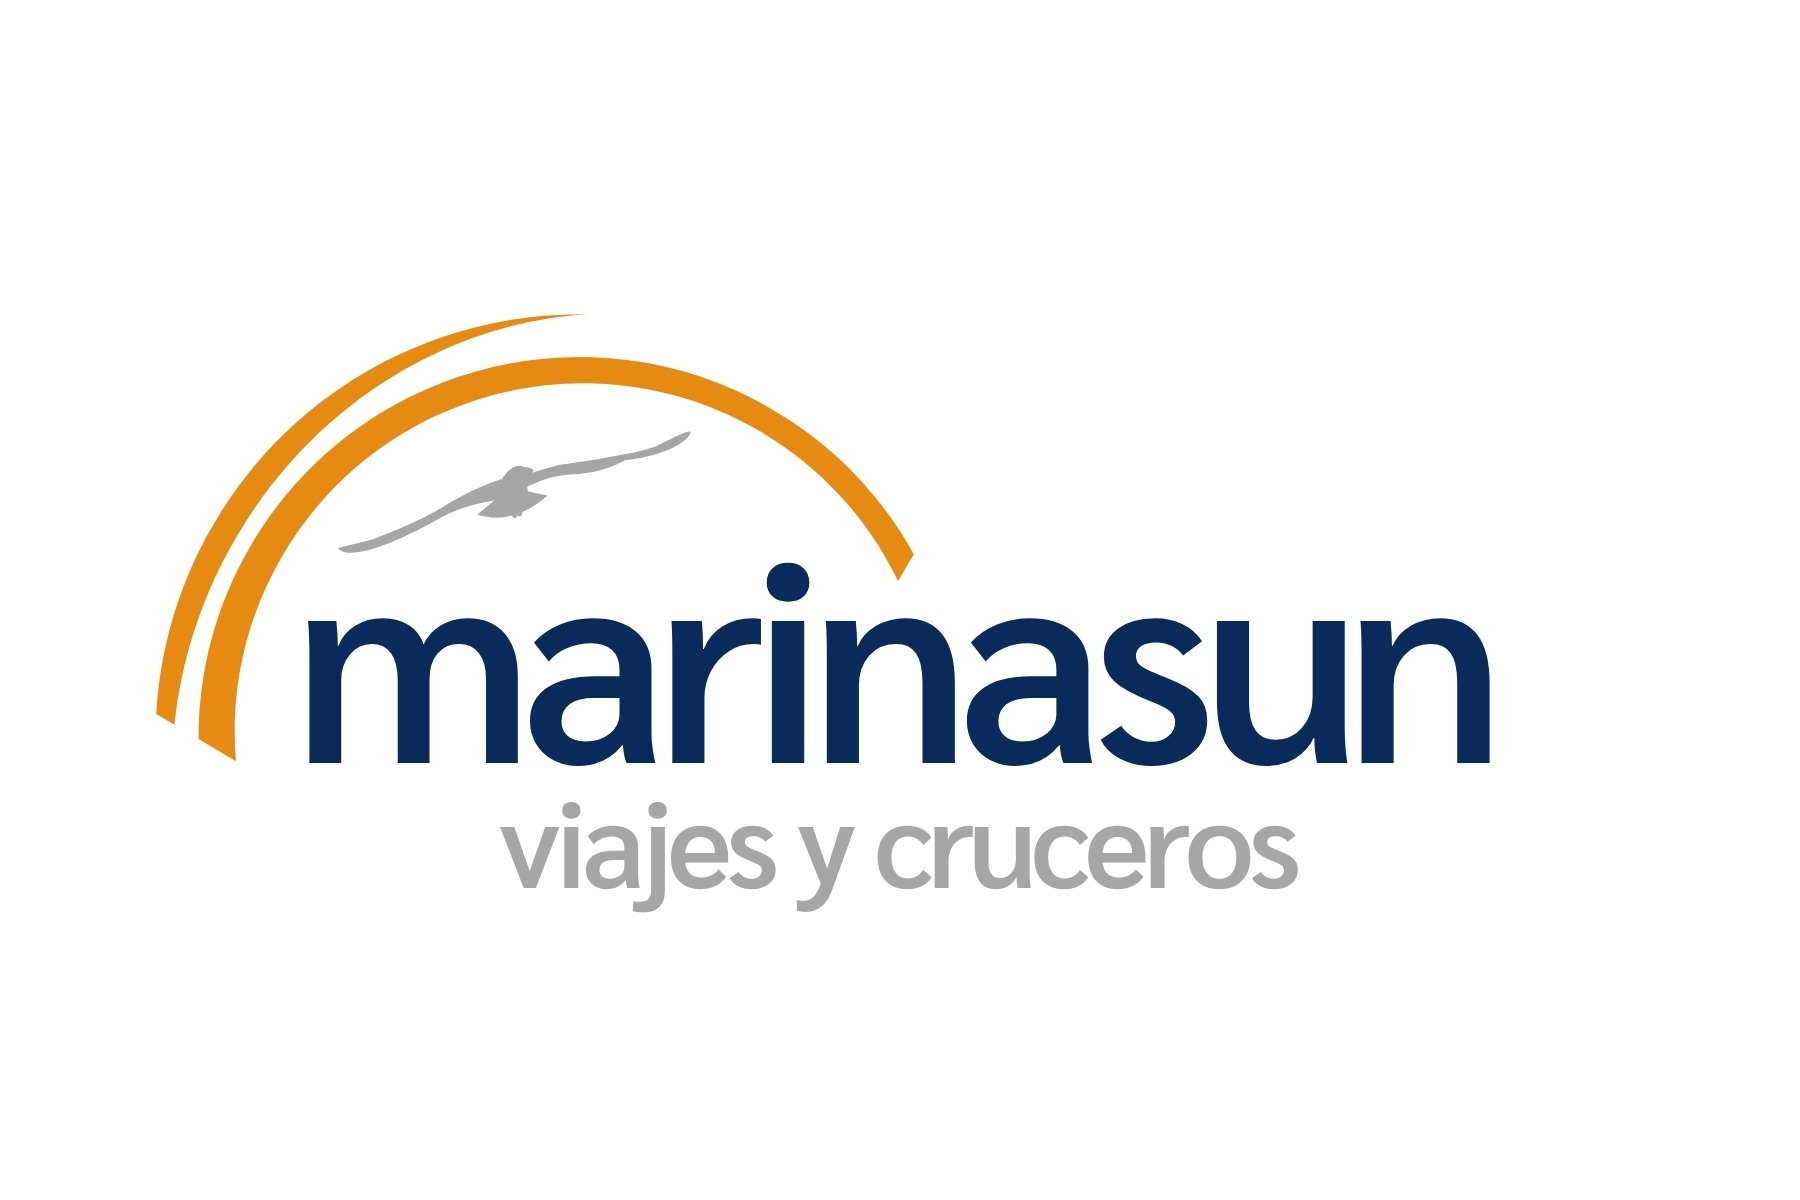 (c) Marinasun.com